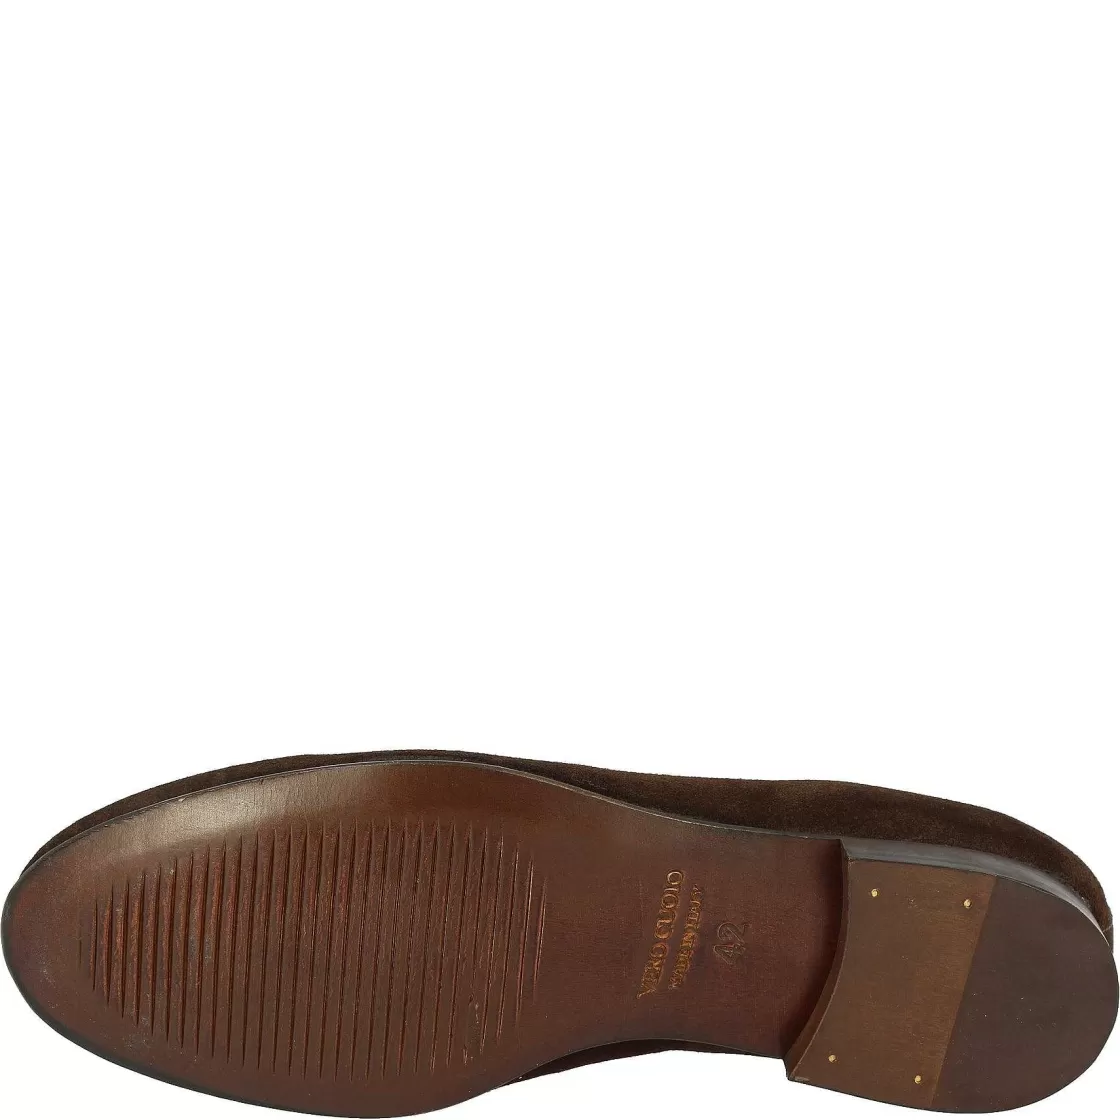 Leonardo Men'S Handmade Slip-On Loafers In Dark Brown Suede Leather Best